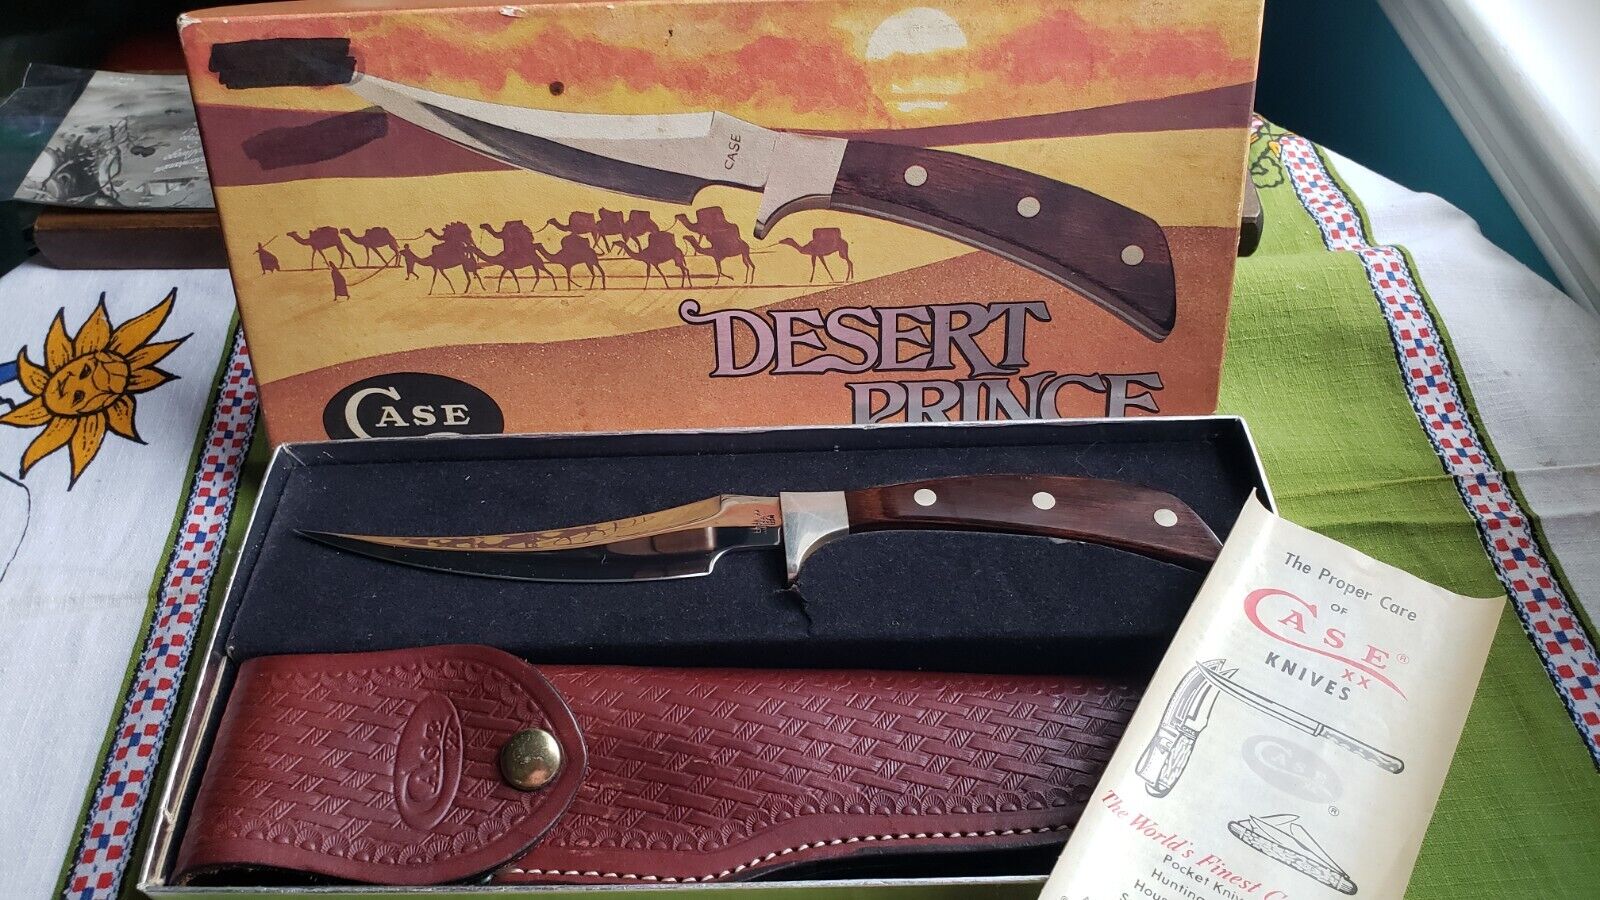 1981 DESERT PRINCE CASE XX KNIFE (398) W/BOX, SHEATH, PAPERWORK/ COMPLETE/UNUSED